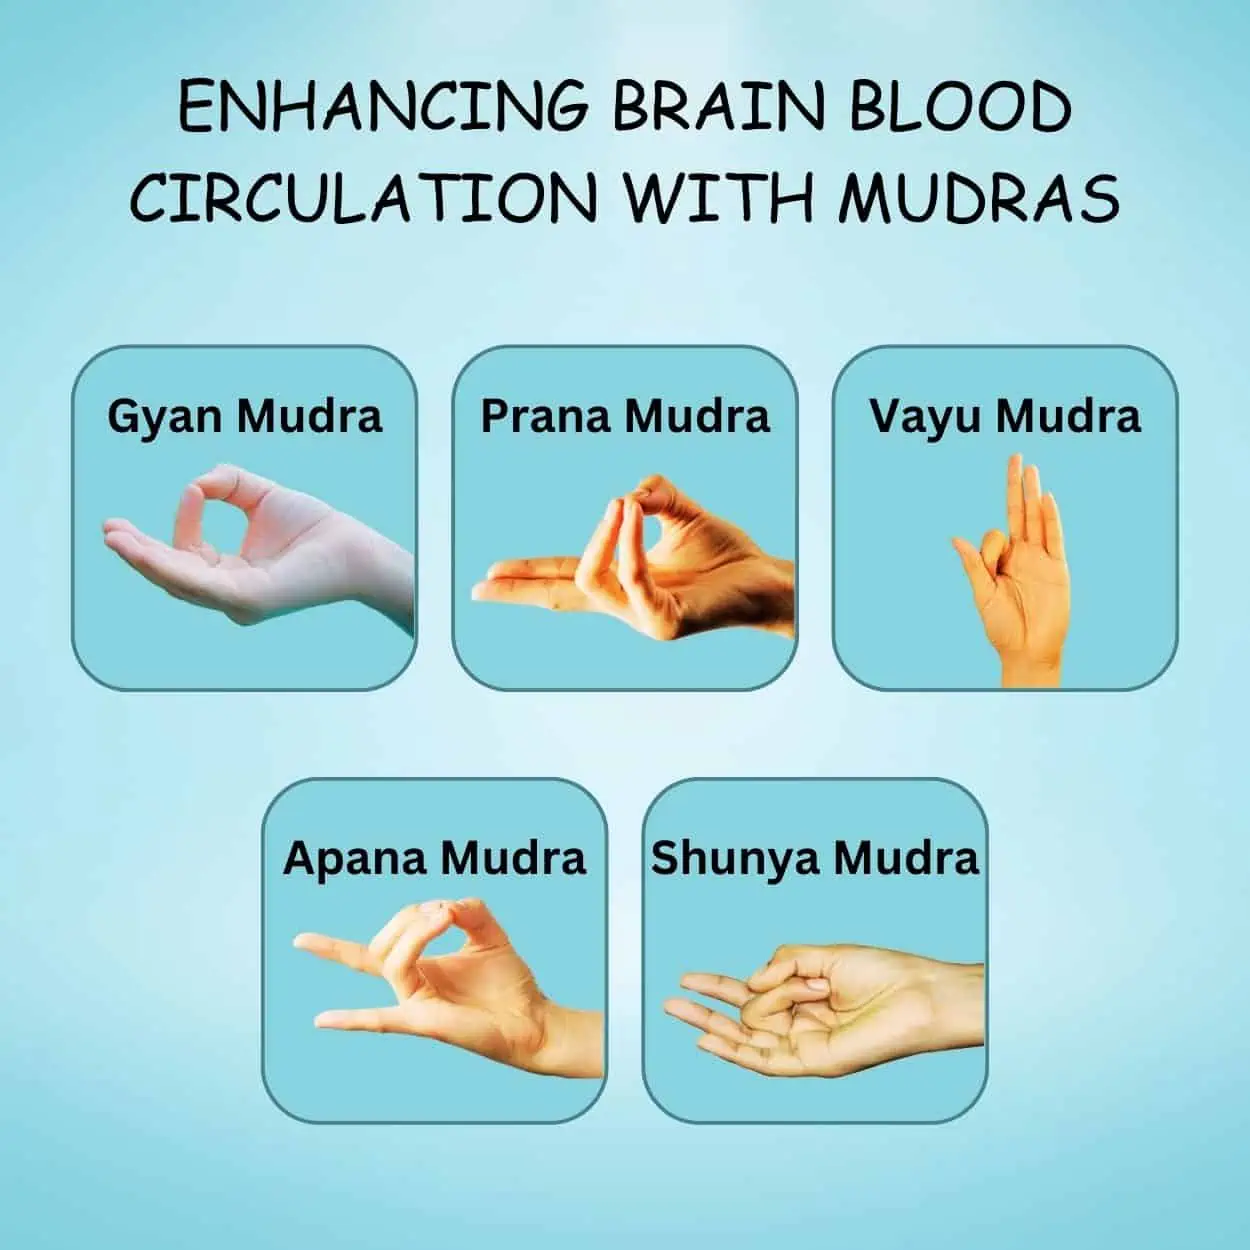 Enhancing Brain Blood Circulation with Mudras